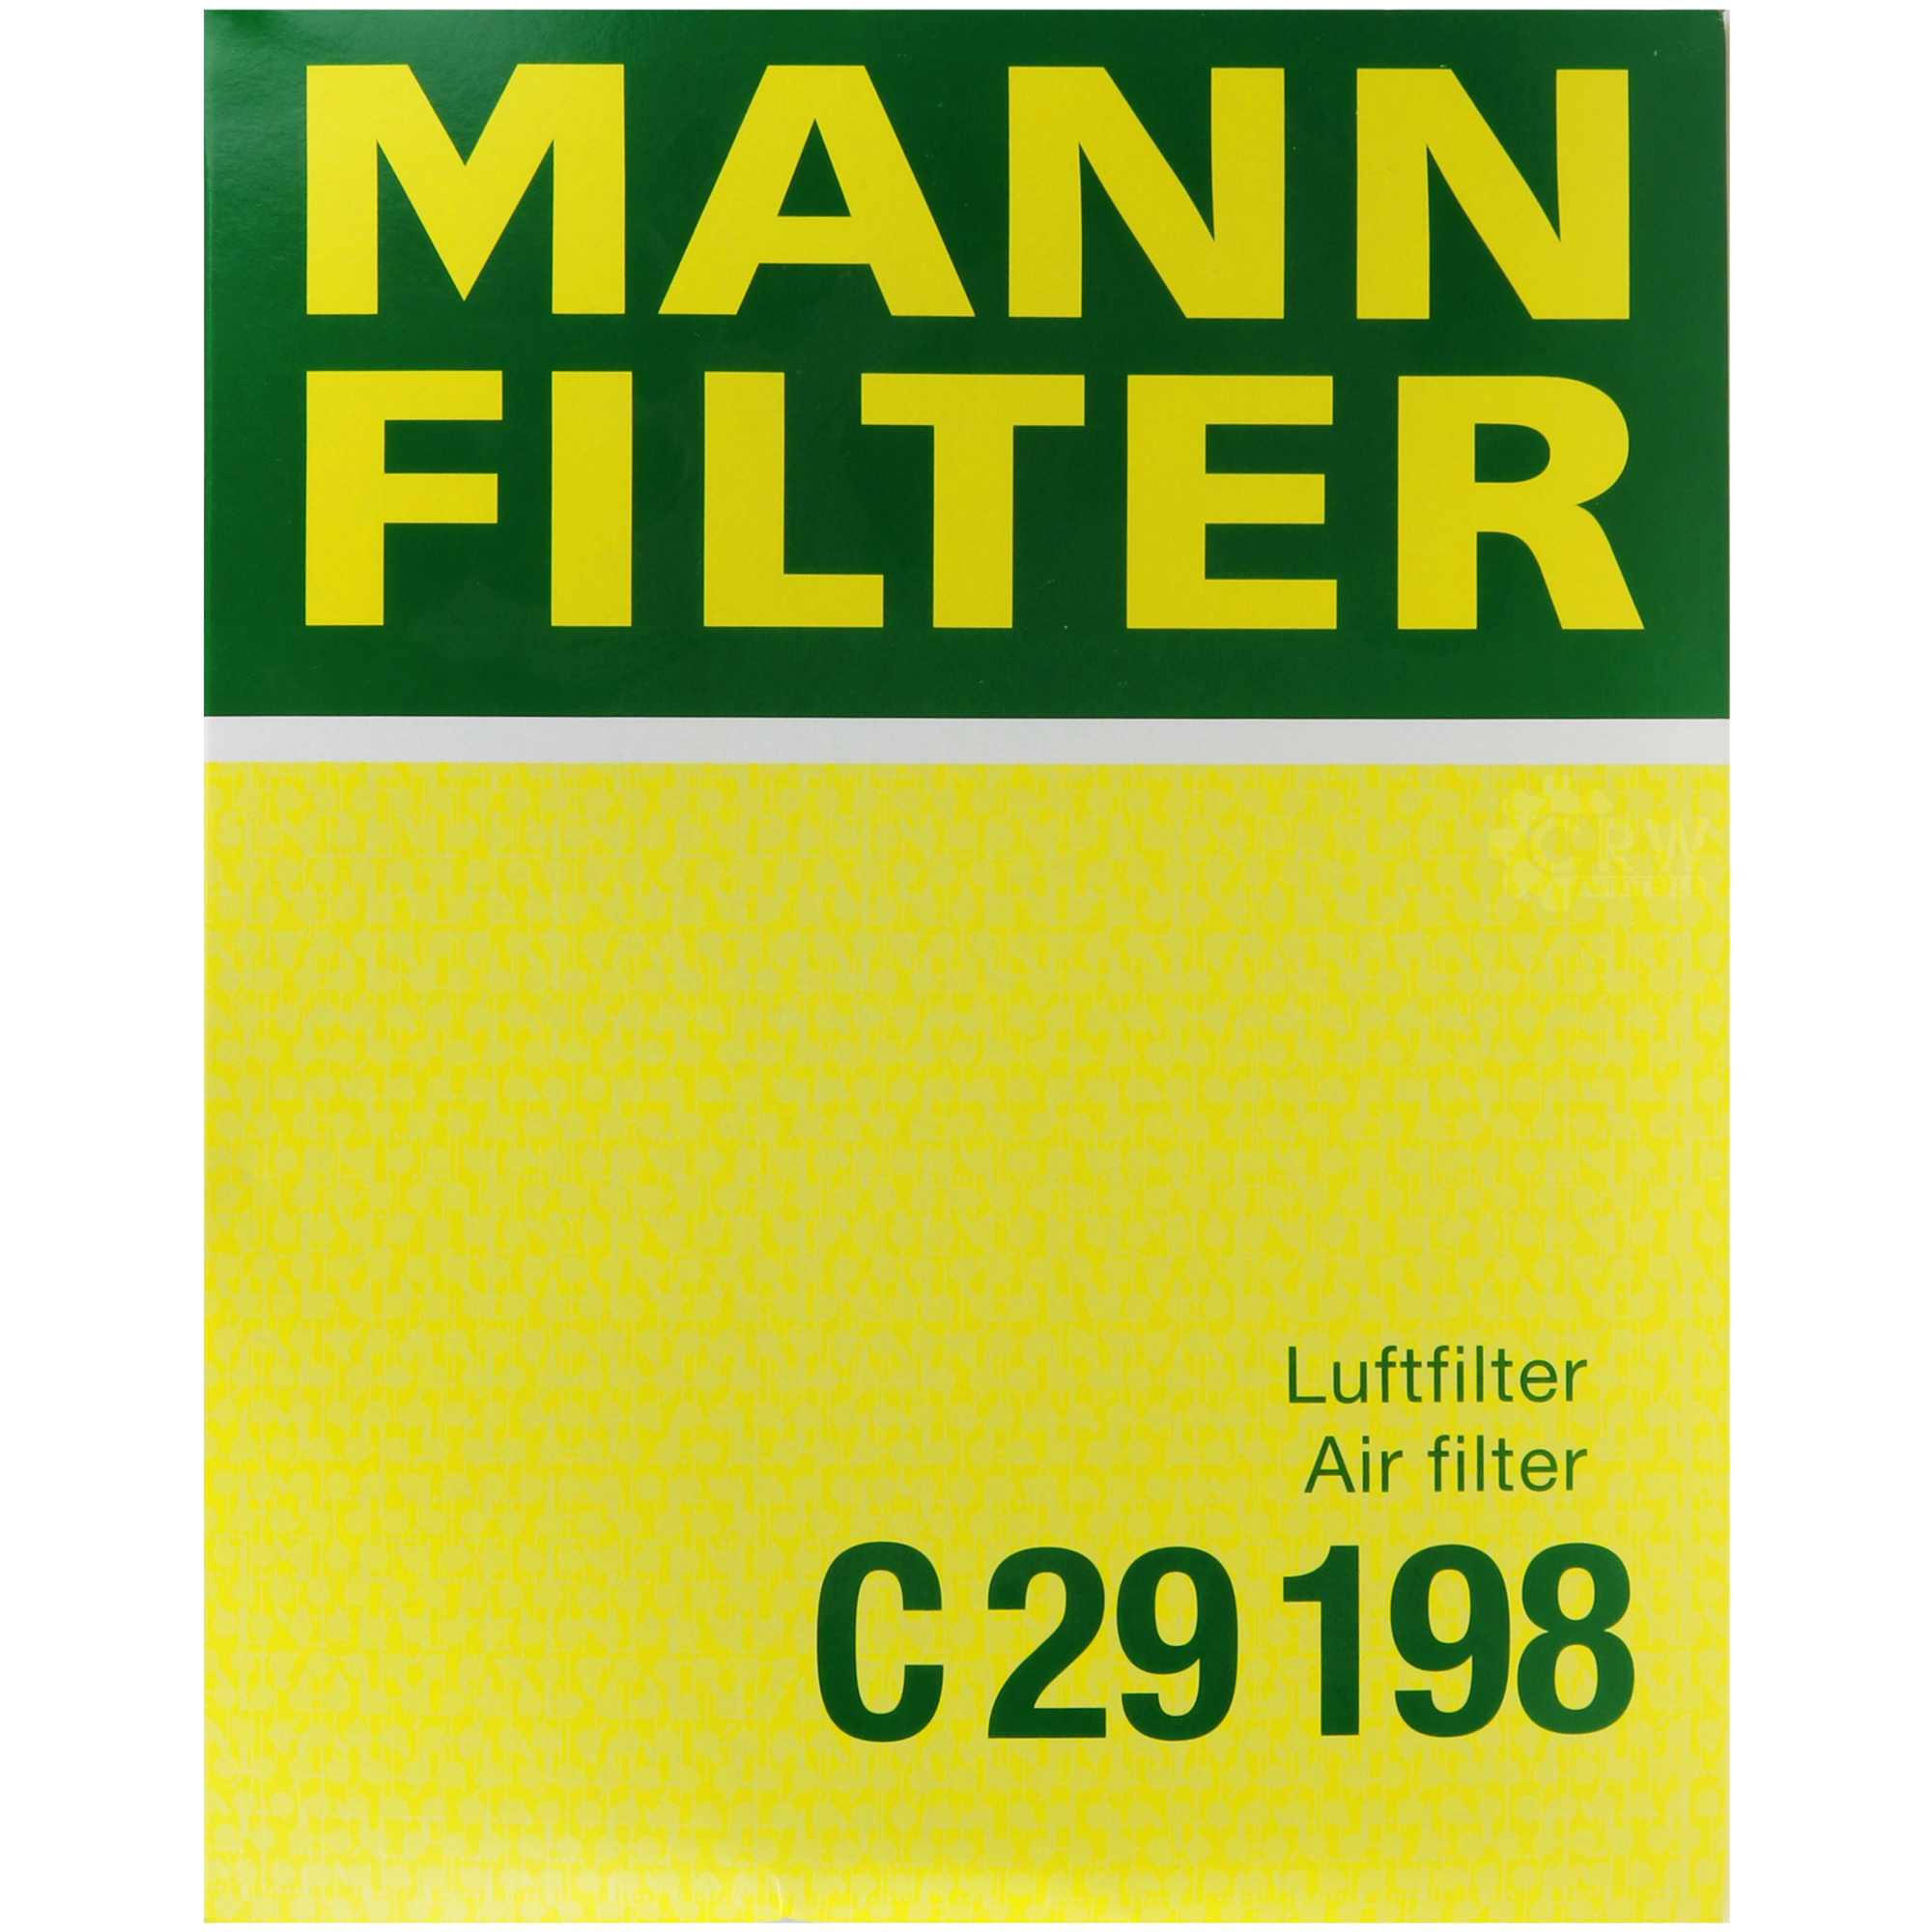 MANN-FILTER Luftfilter für VW Transporter IV Bus 70XB 70XC 7DB 7DW 2.5 TDI